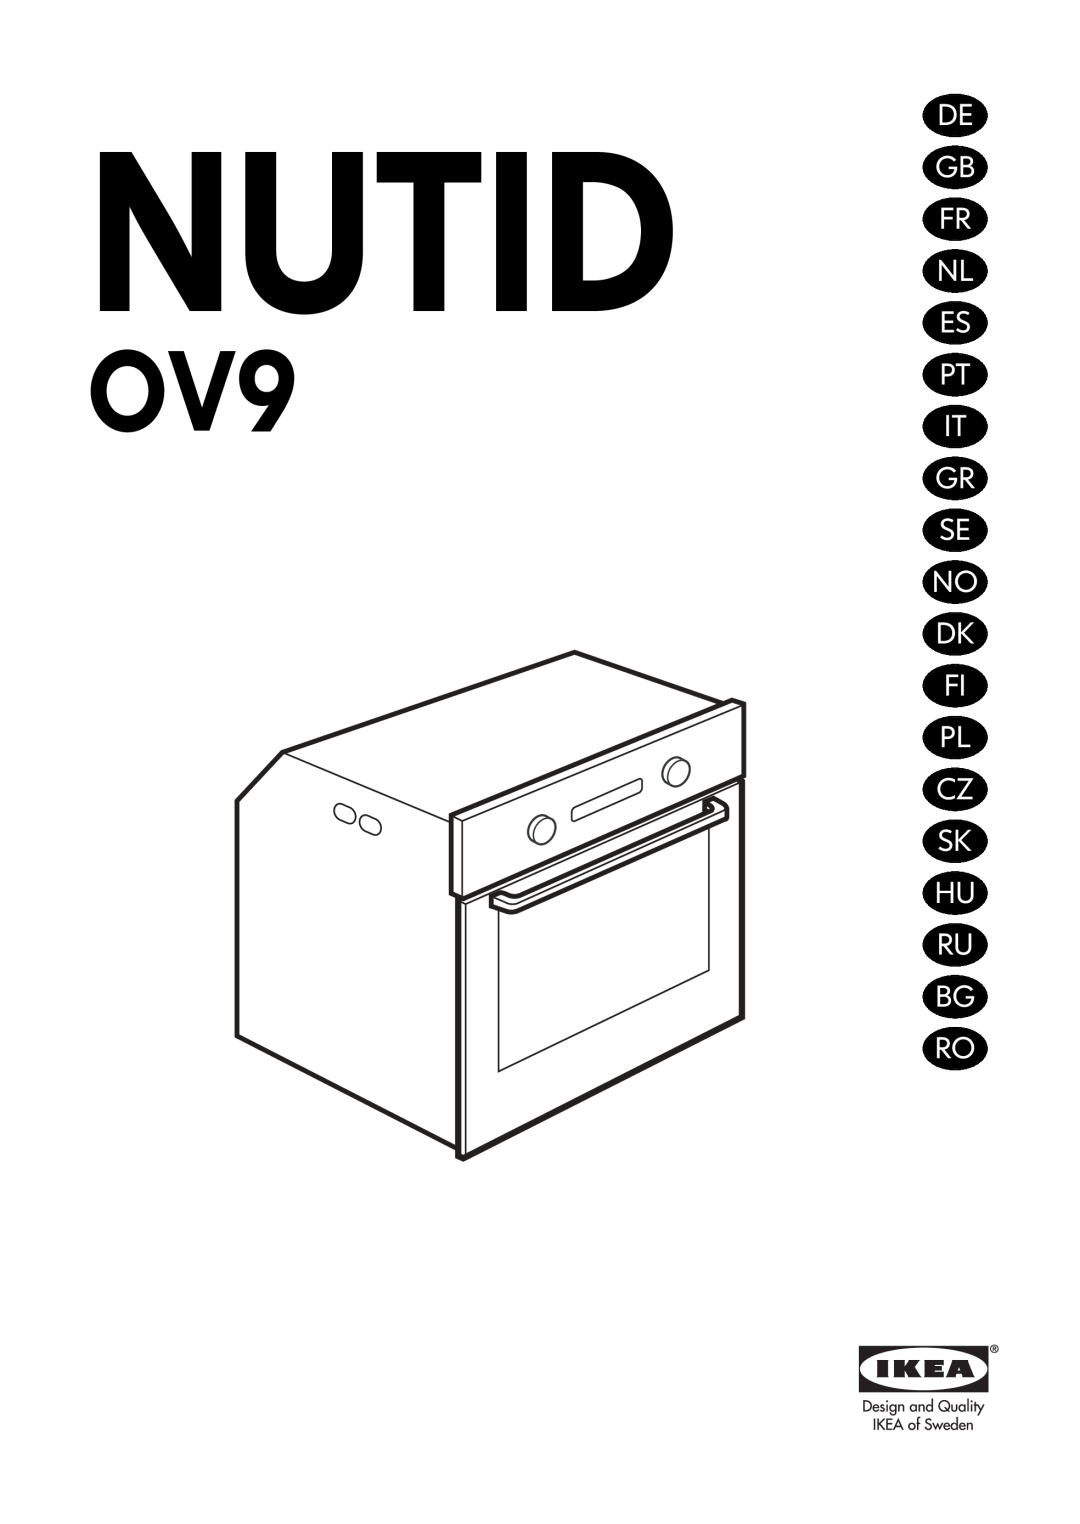 IKEA OV9 manual Nutid, De Gb Fr Nl Es Pt It Gr Se No Dk Fi Pl Cz Sk Hu, Ru Bg Ro 